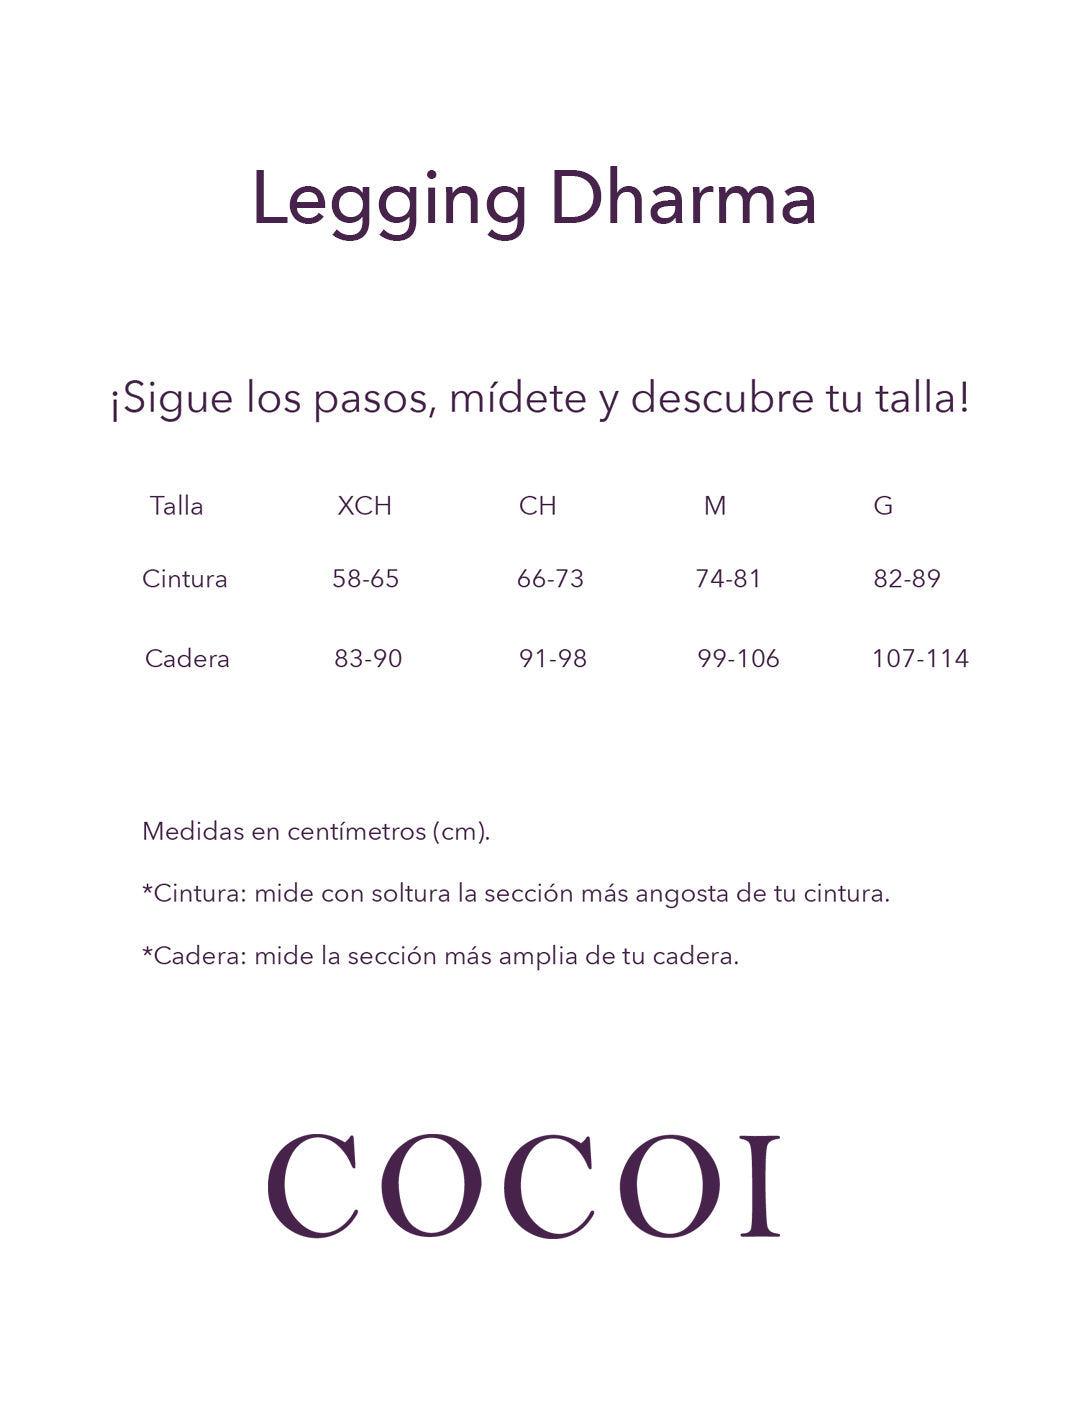 Legging Dharma Cocoi